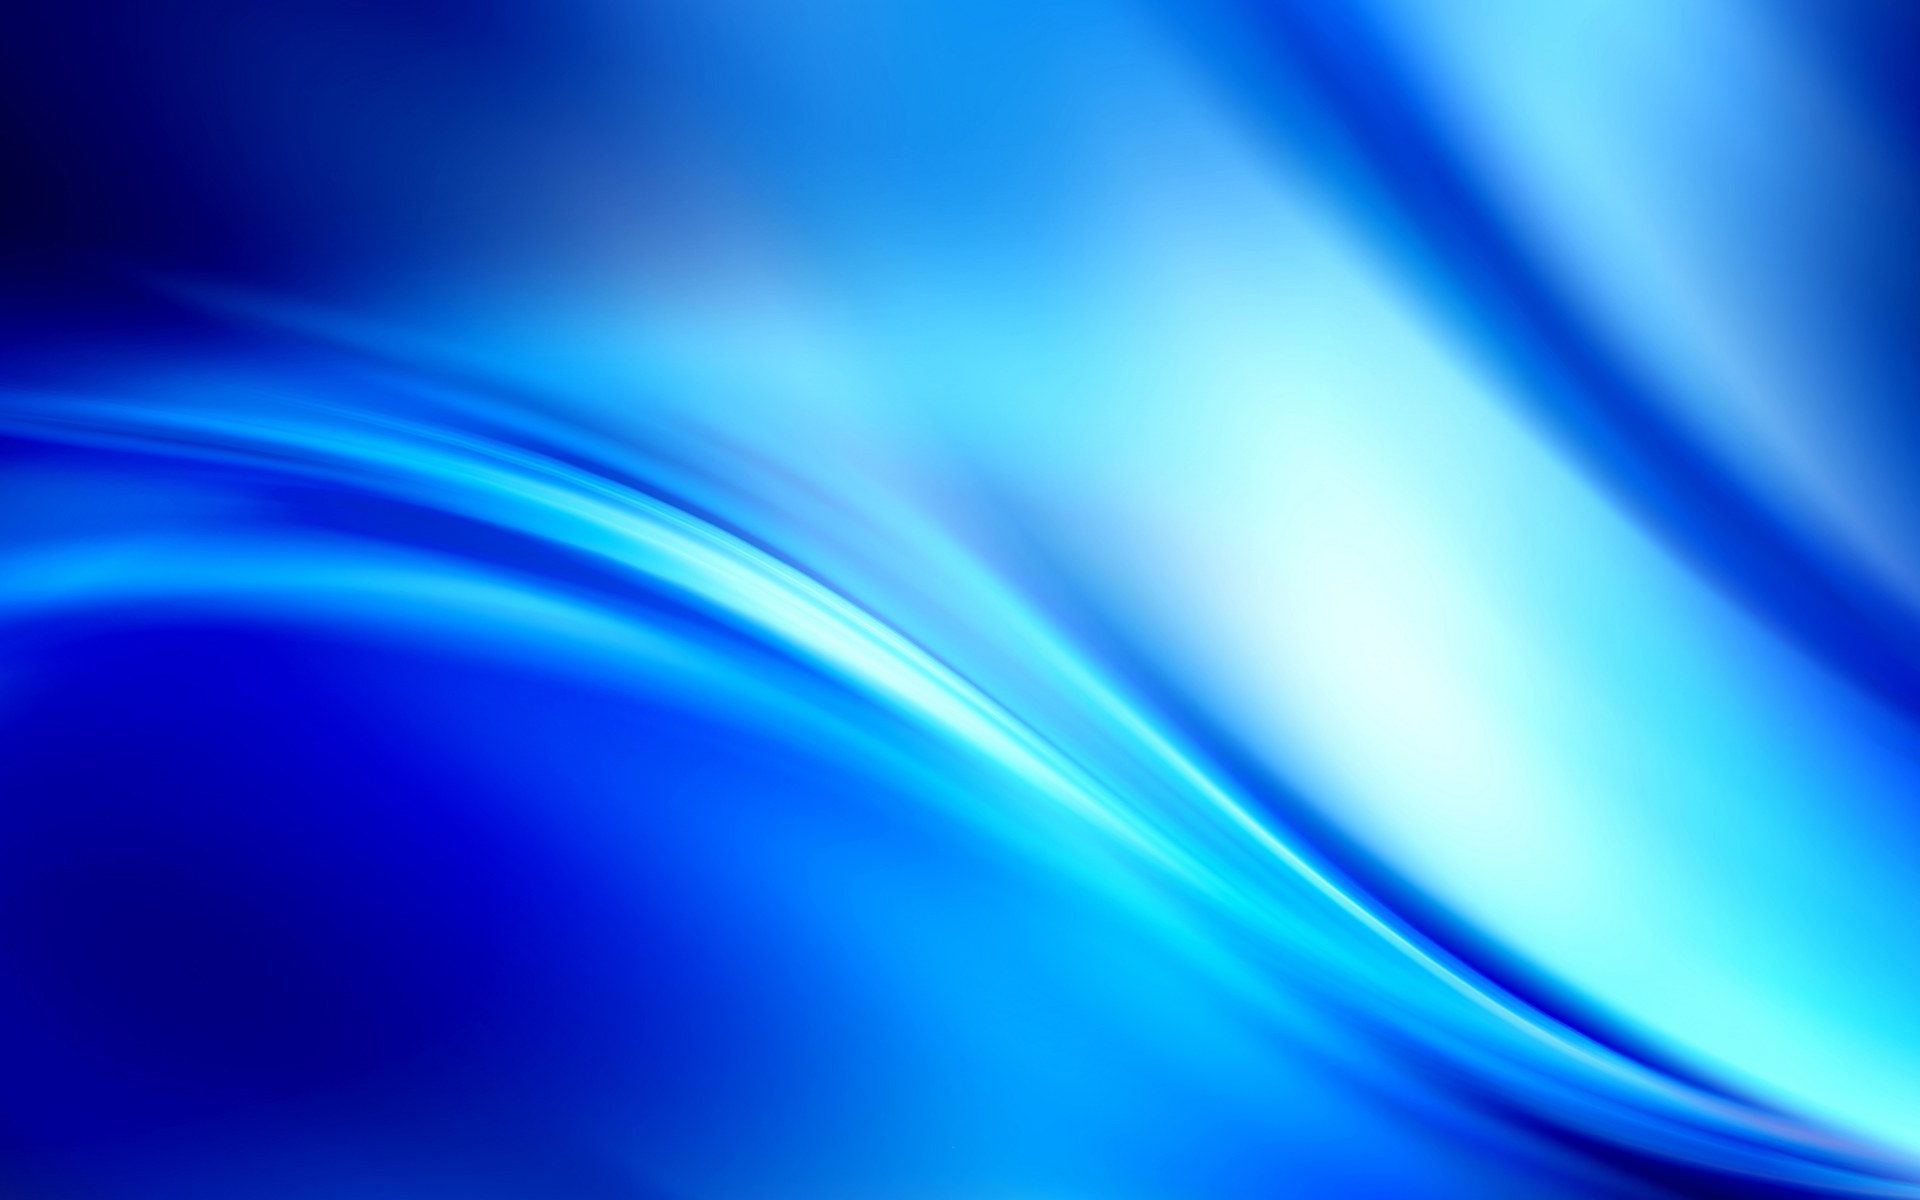 Blue HD Wallpapers For Best Desktop Resolution - UseLive